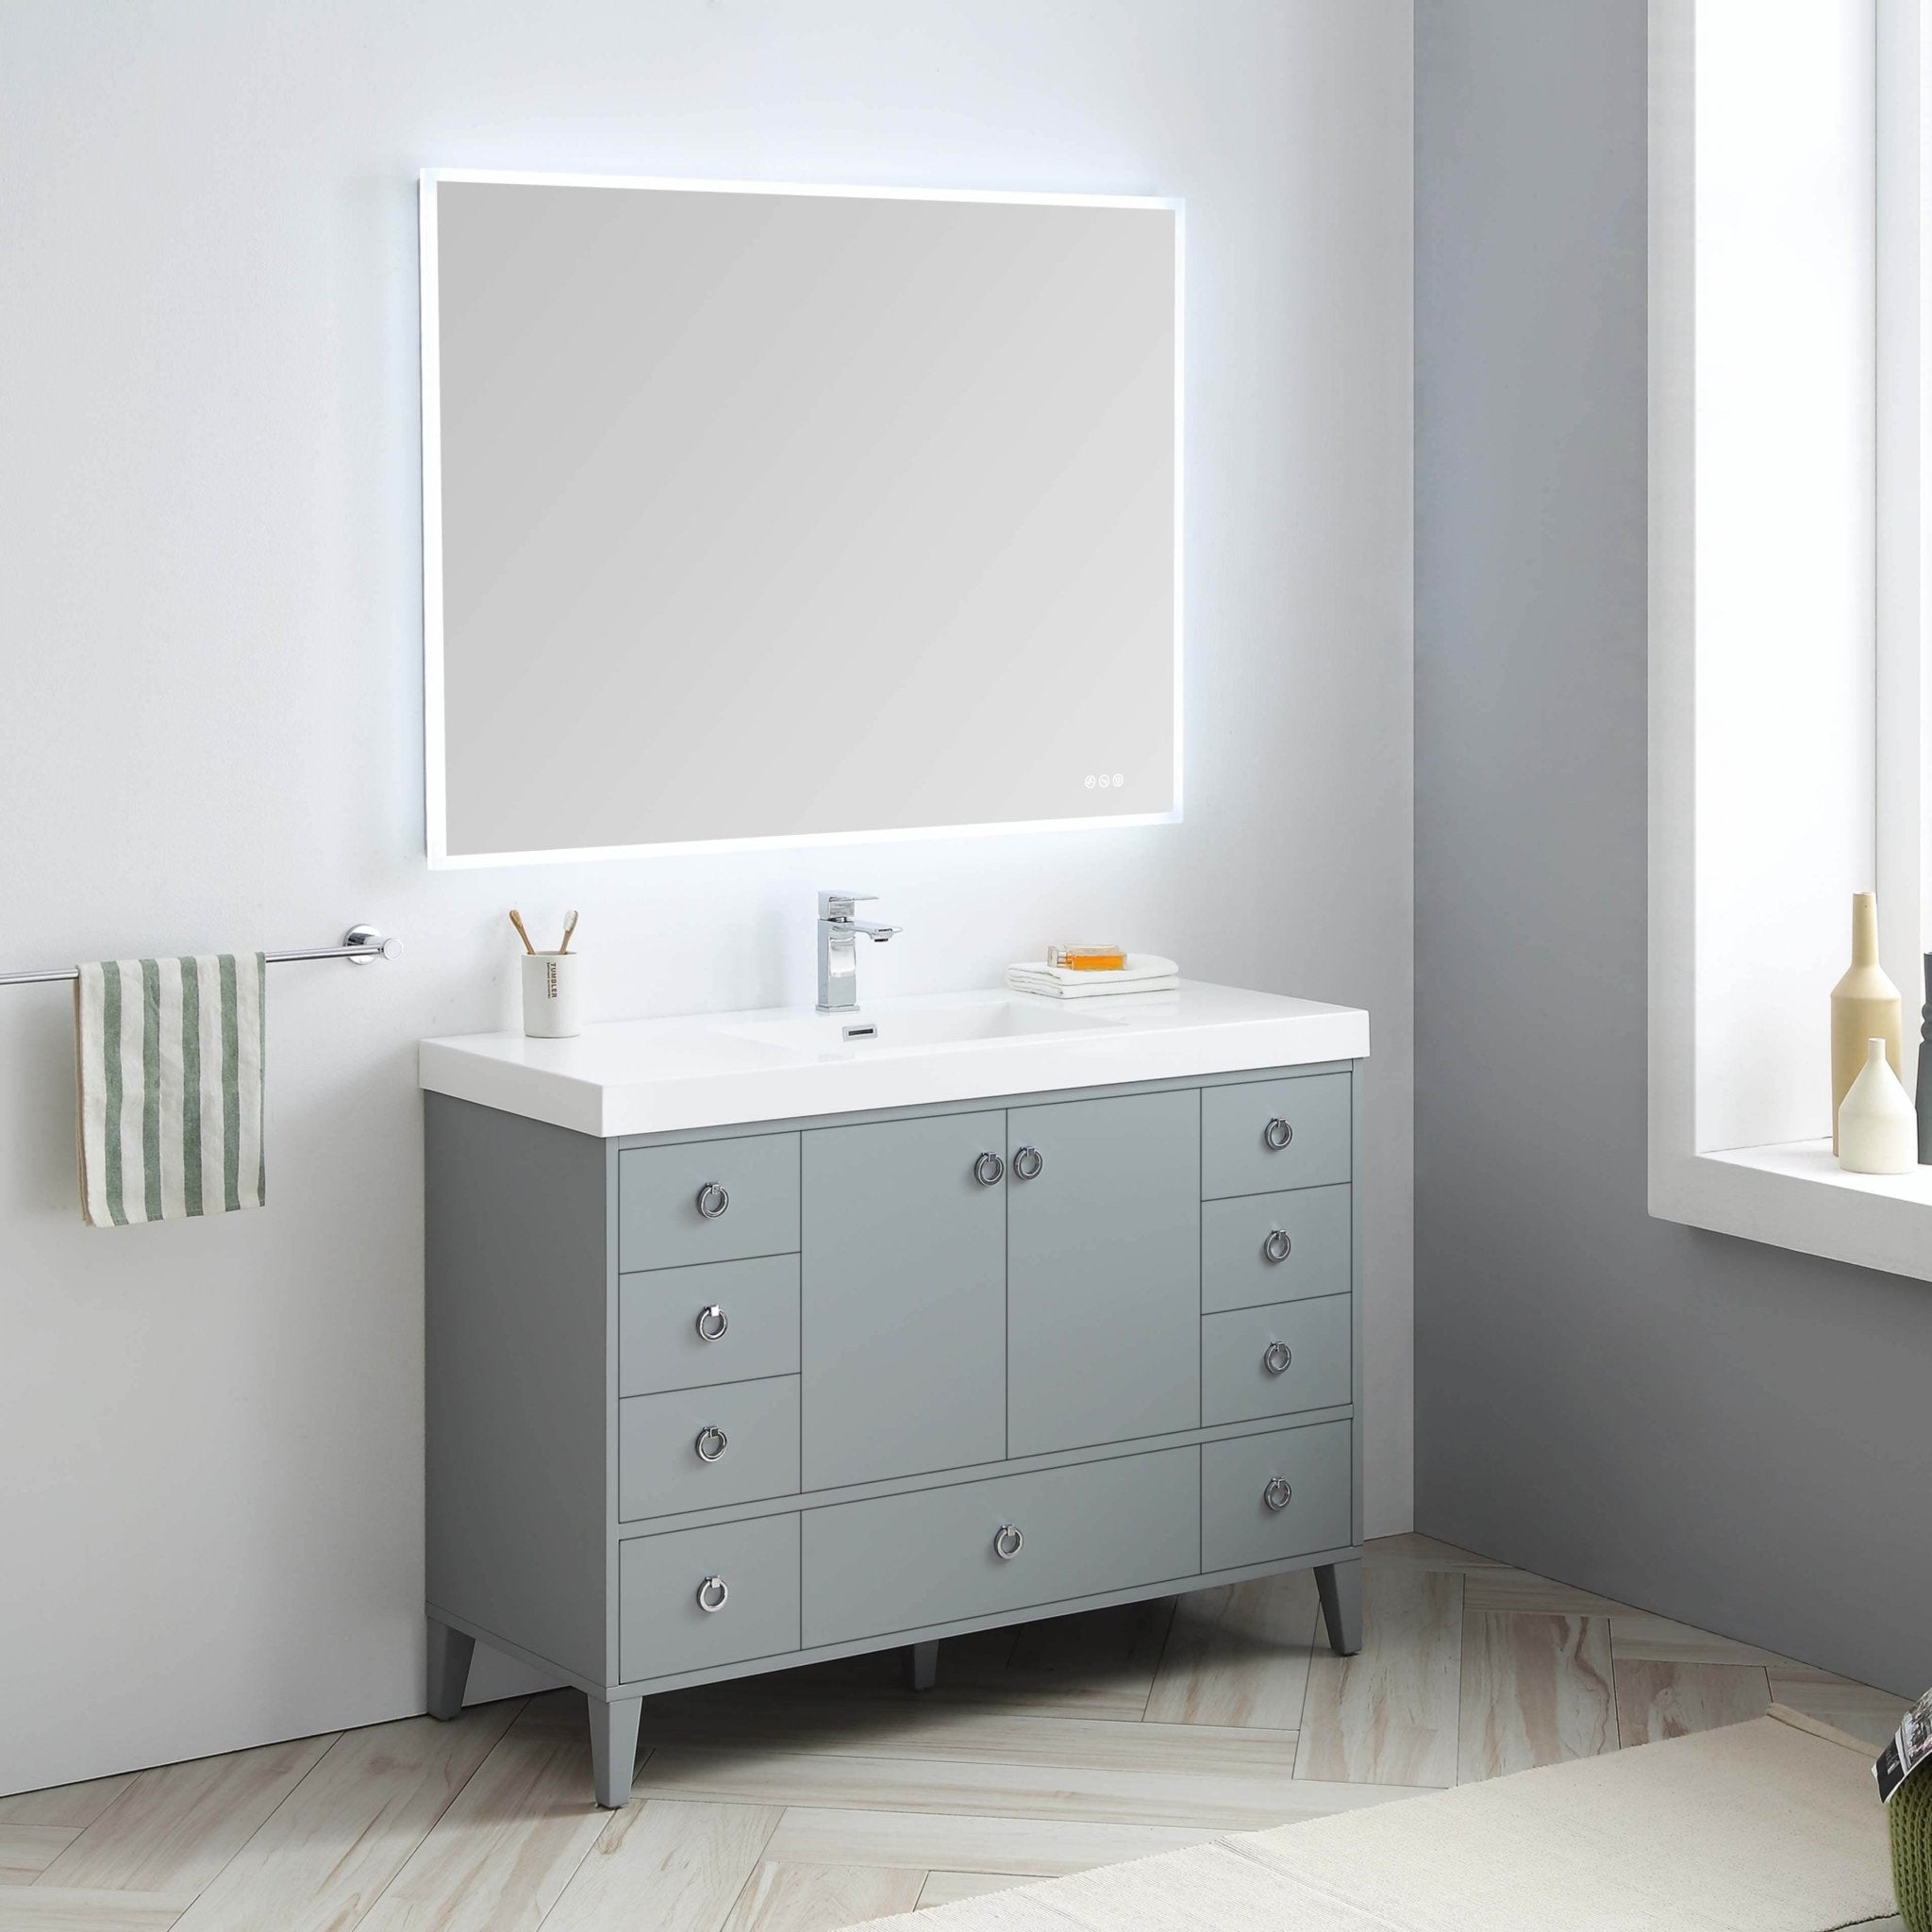 Lyon - 48 Inch Vanity with Acrylic Single Sink - Metal Gray - Molaix842708123403Lyon023 48 15S A